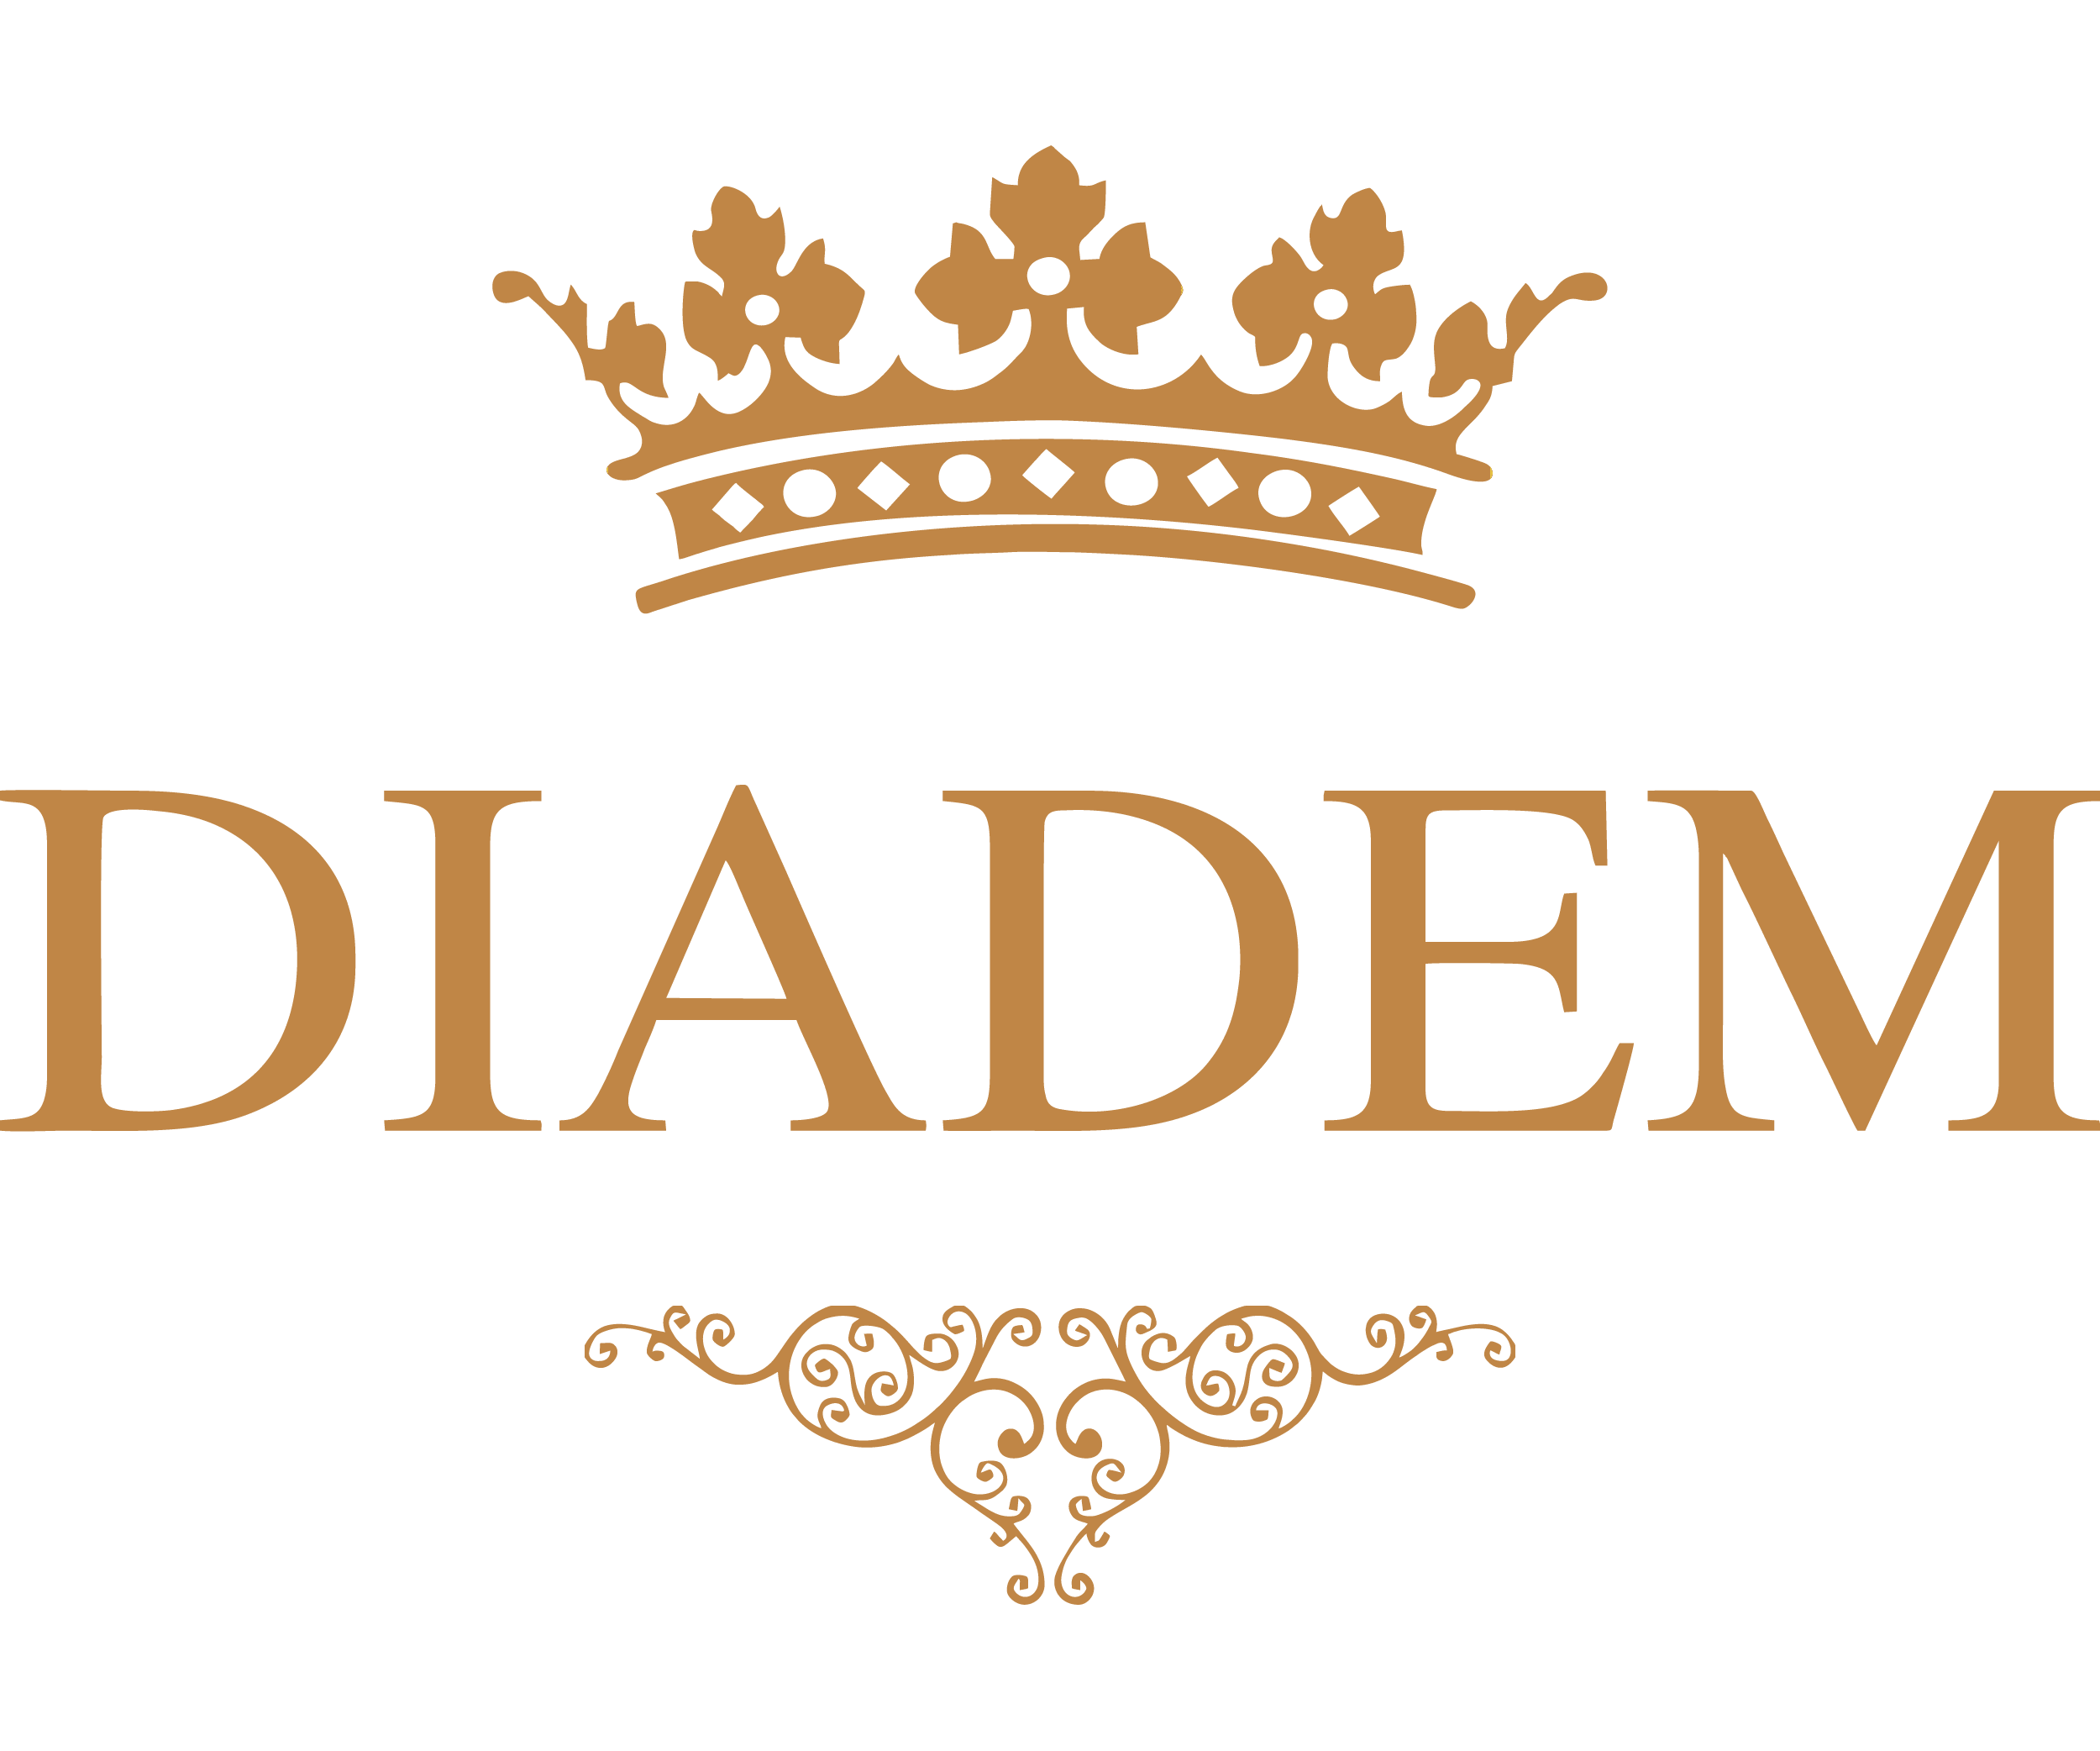 diadem logo.ee81c52d